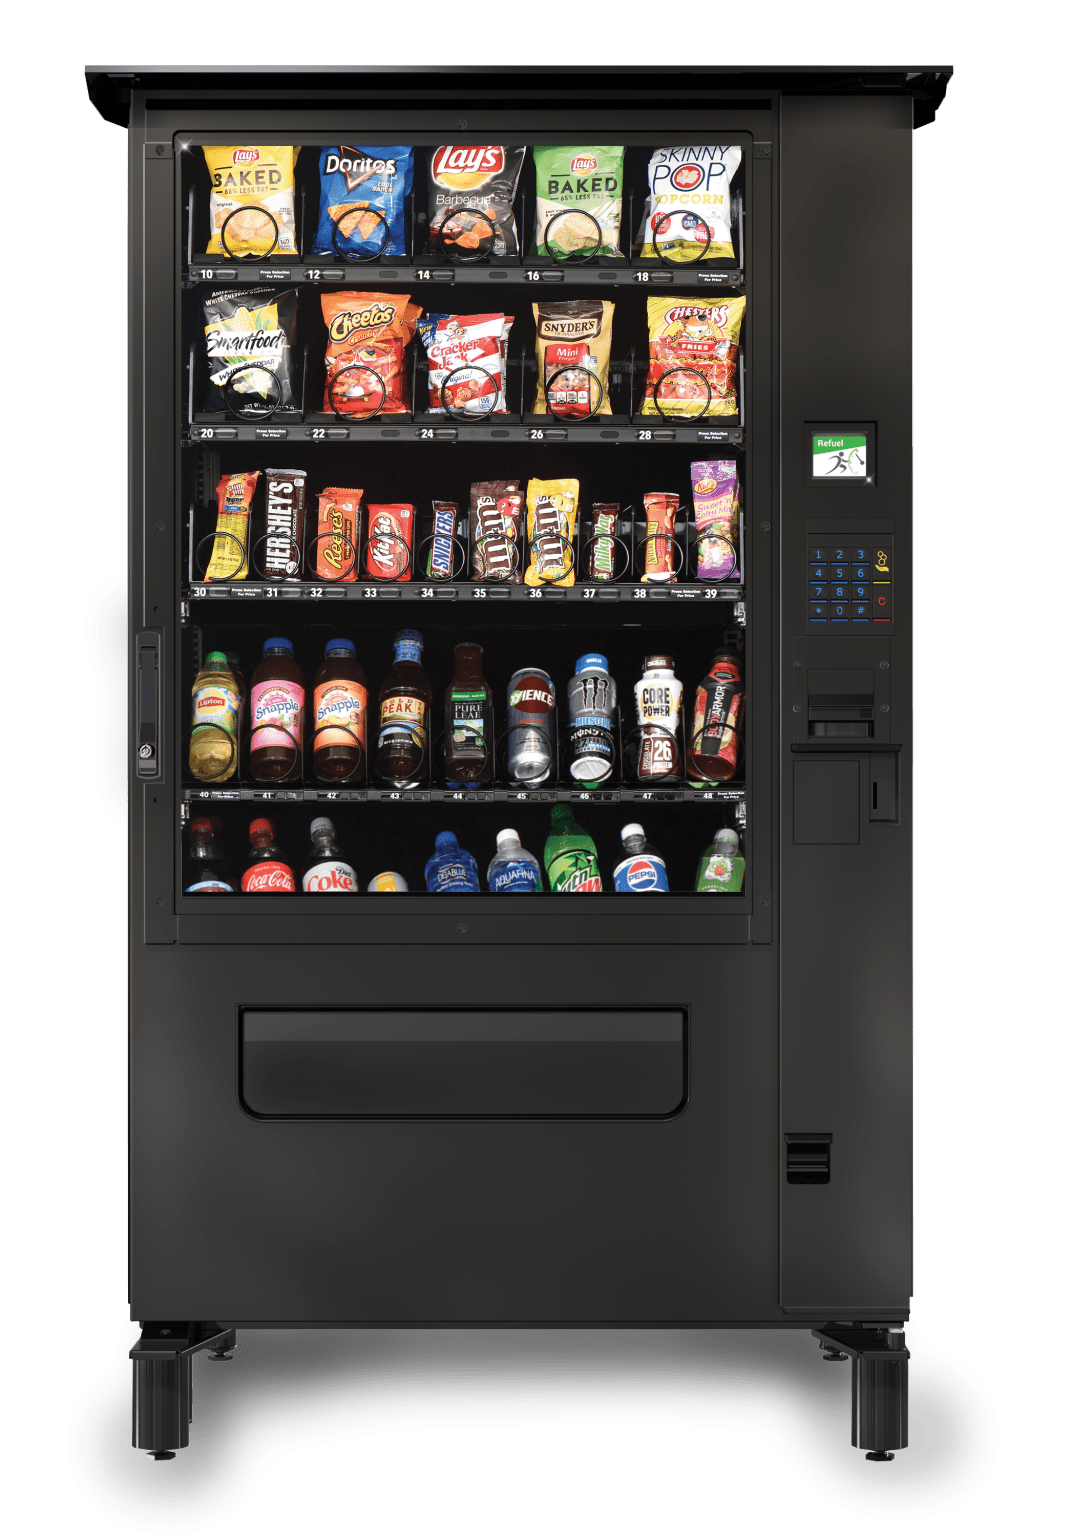 Evoke 6 - USelectIt - Vending Machines for Sale